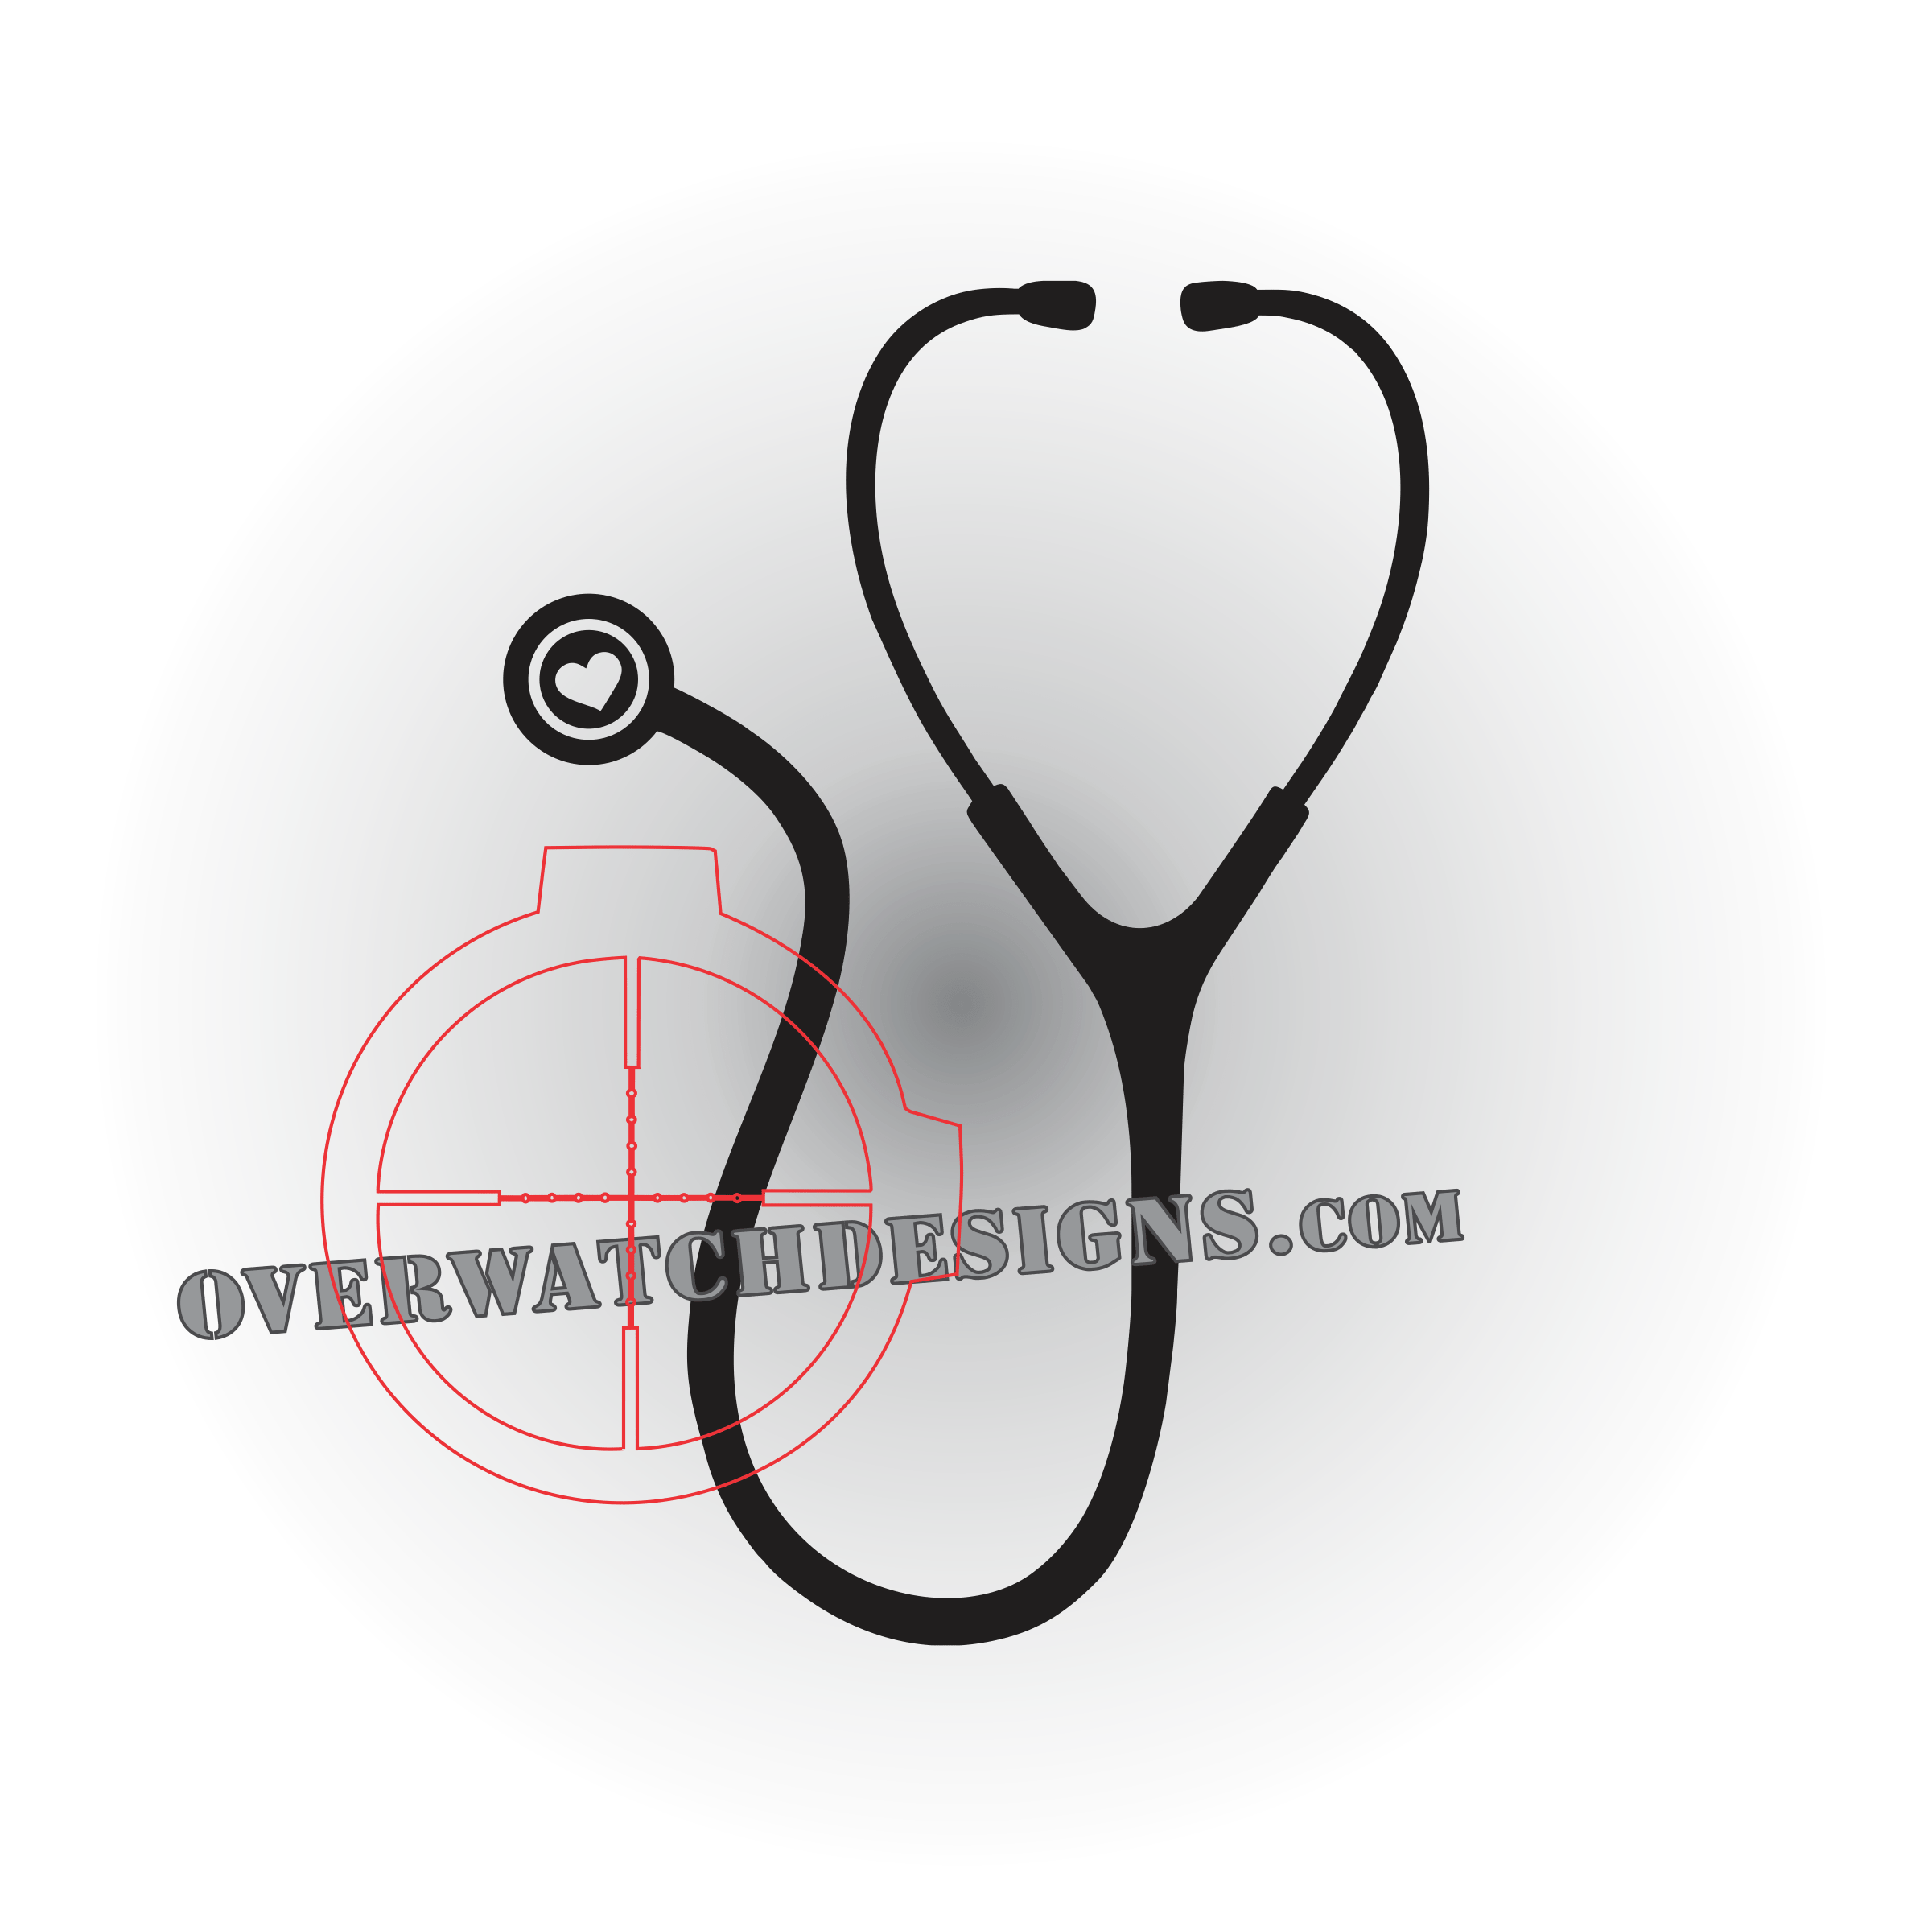 Stethoscope Decal - Overwatch Designs